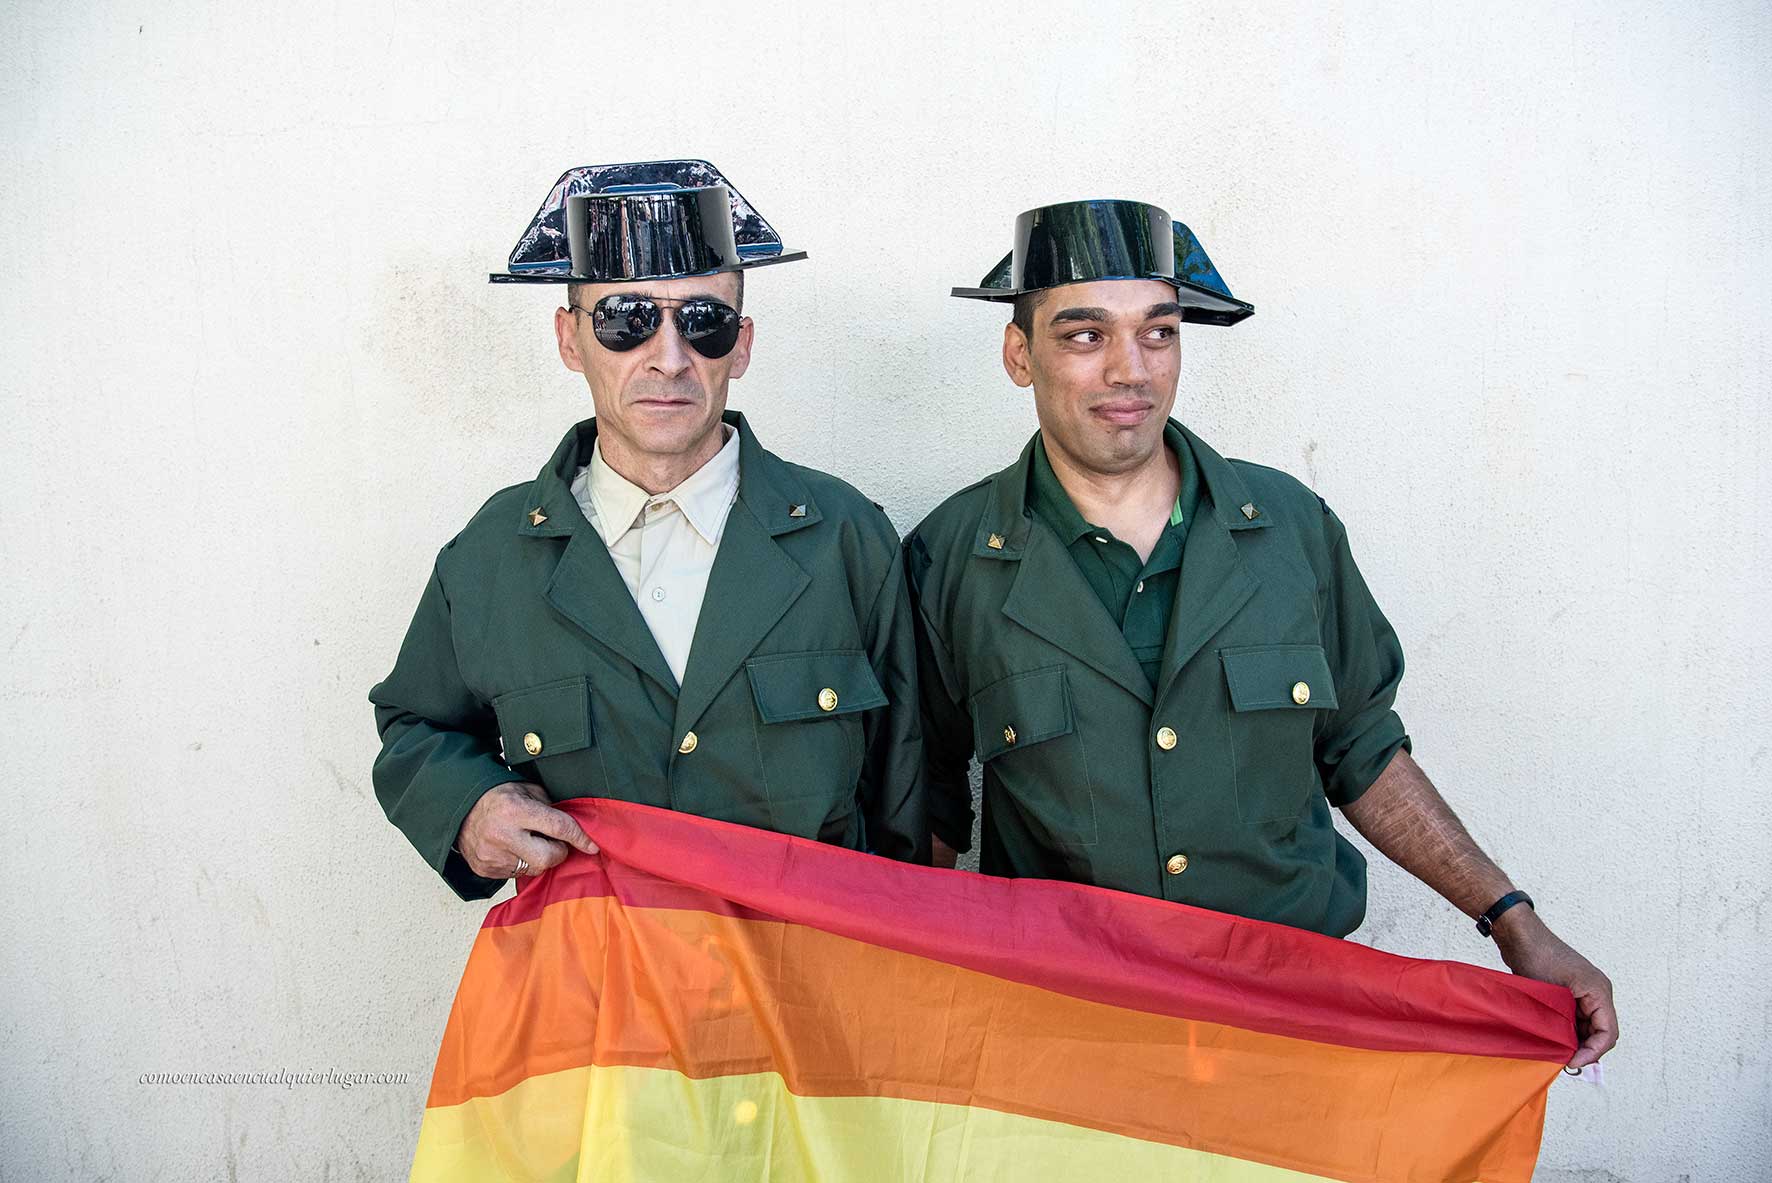 orgullo gay madrid 2017